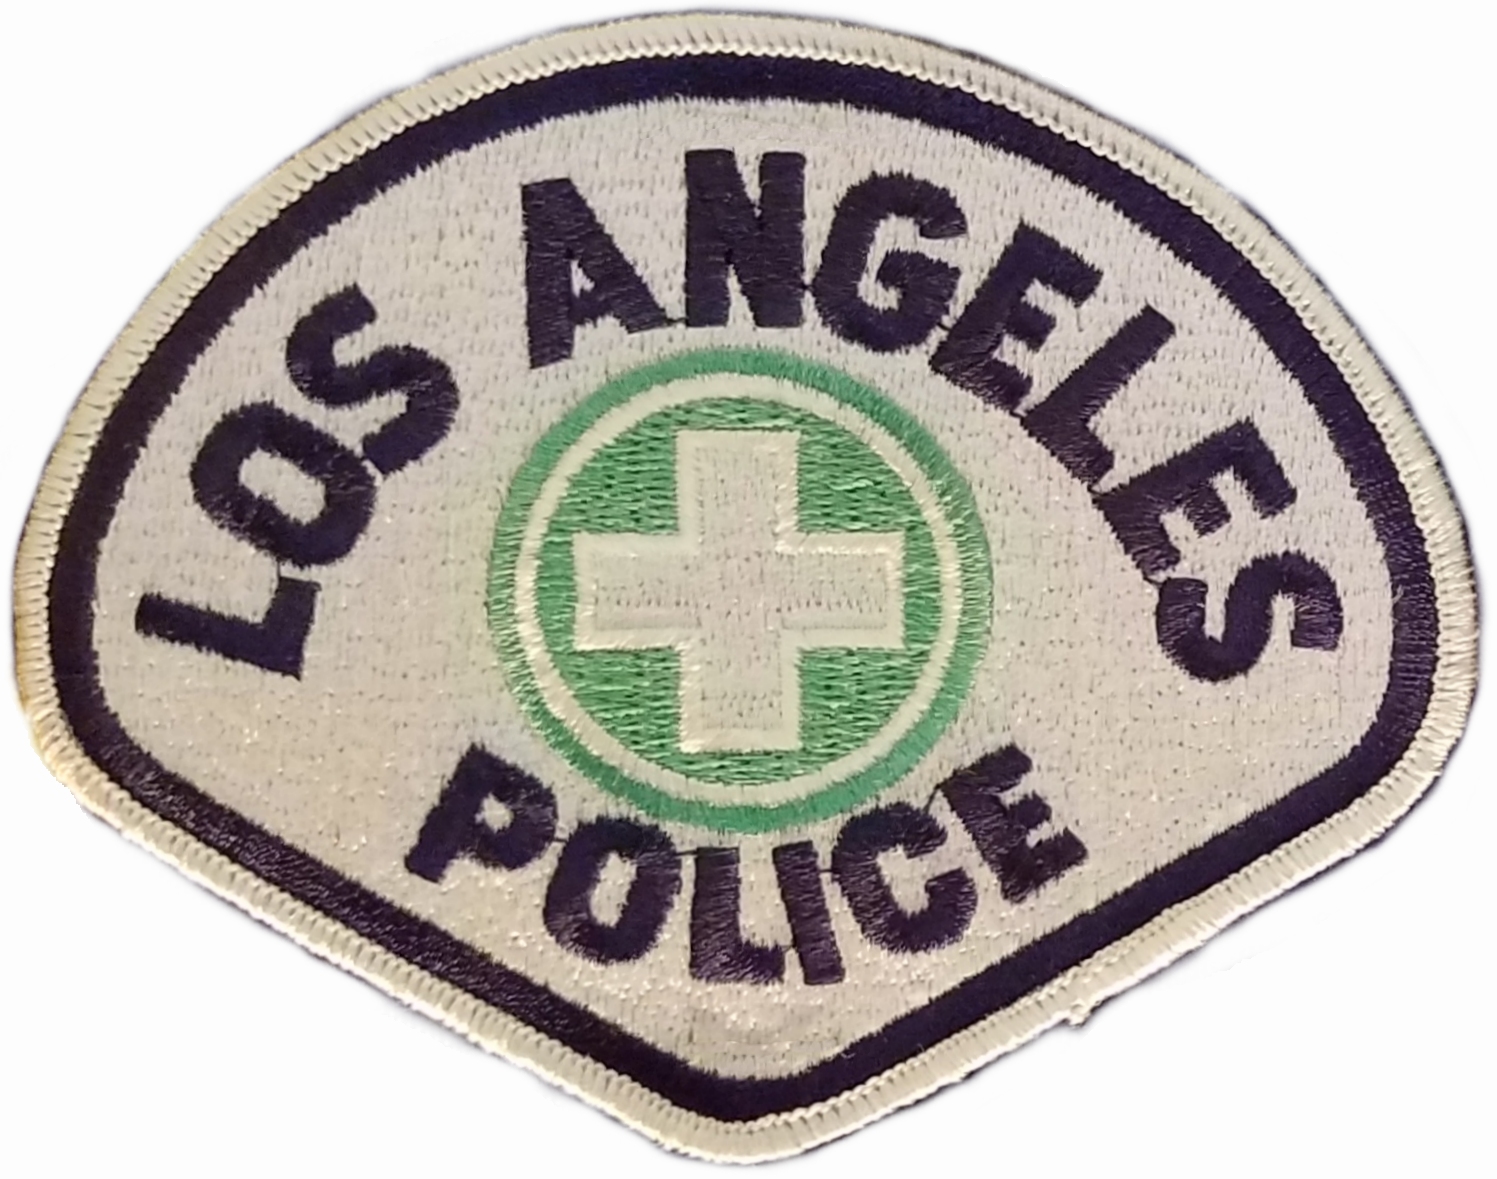 Los Angeles, CA Police Department